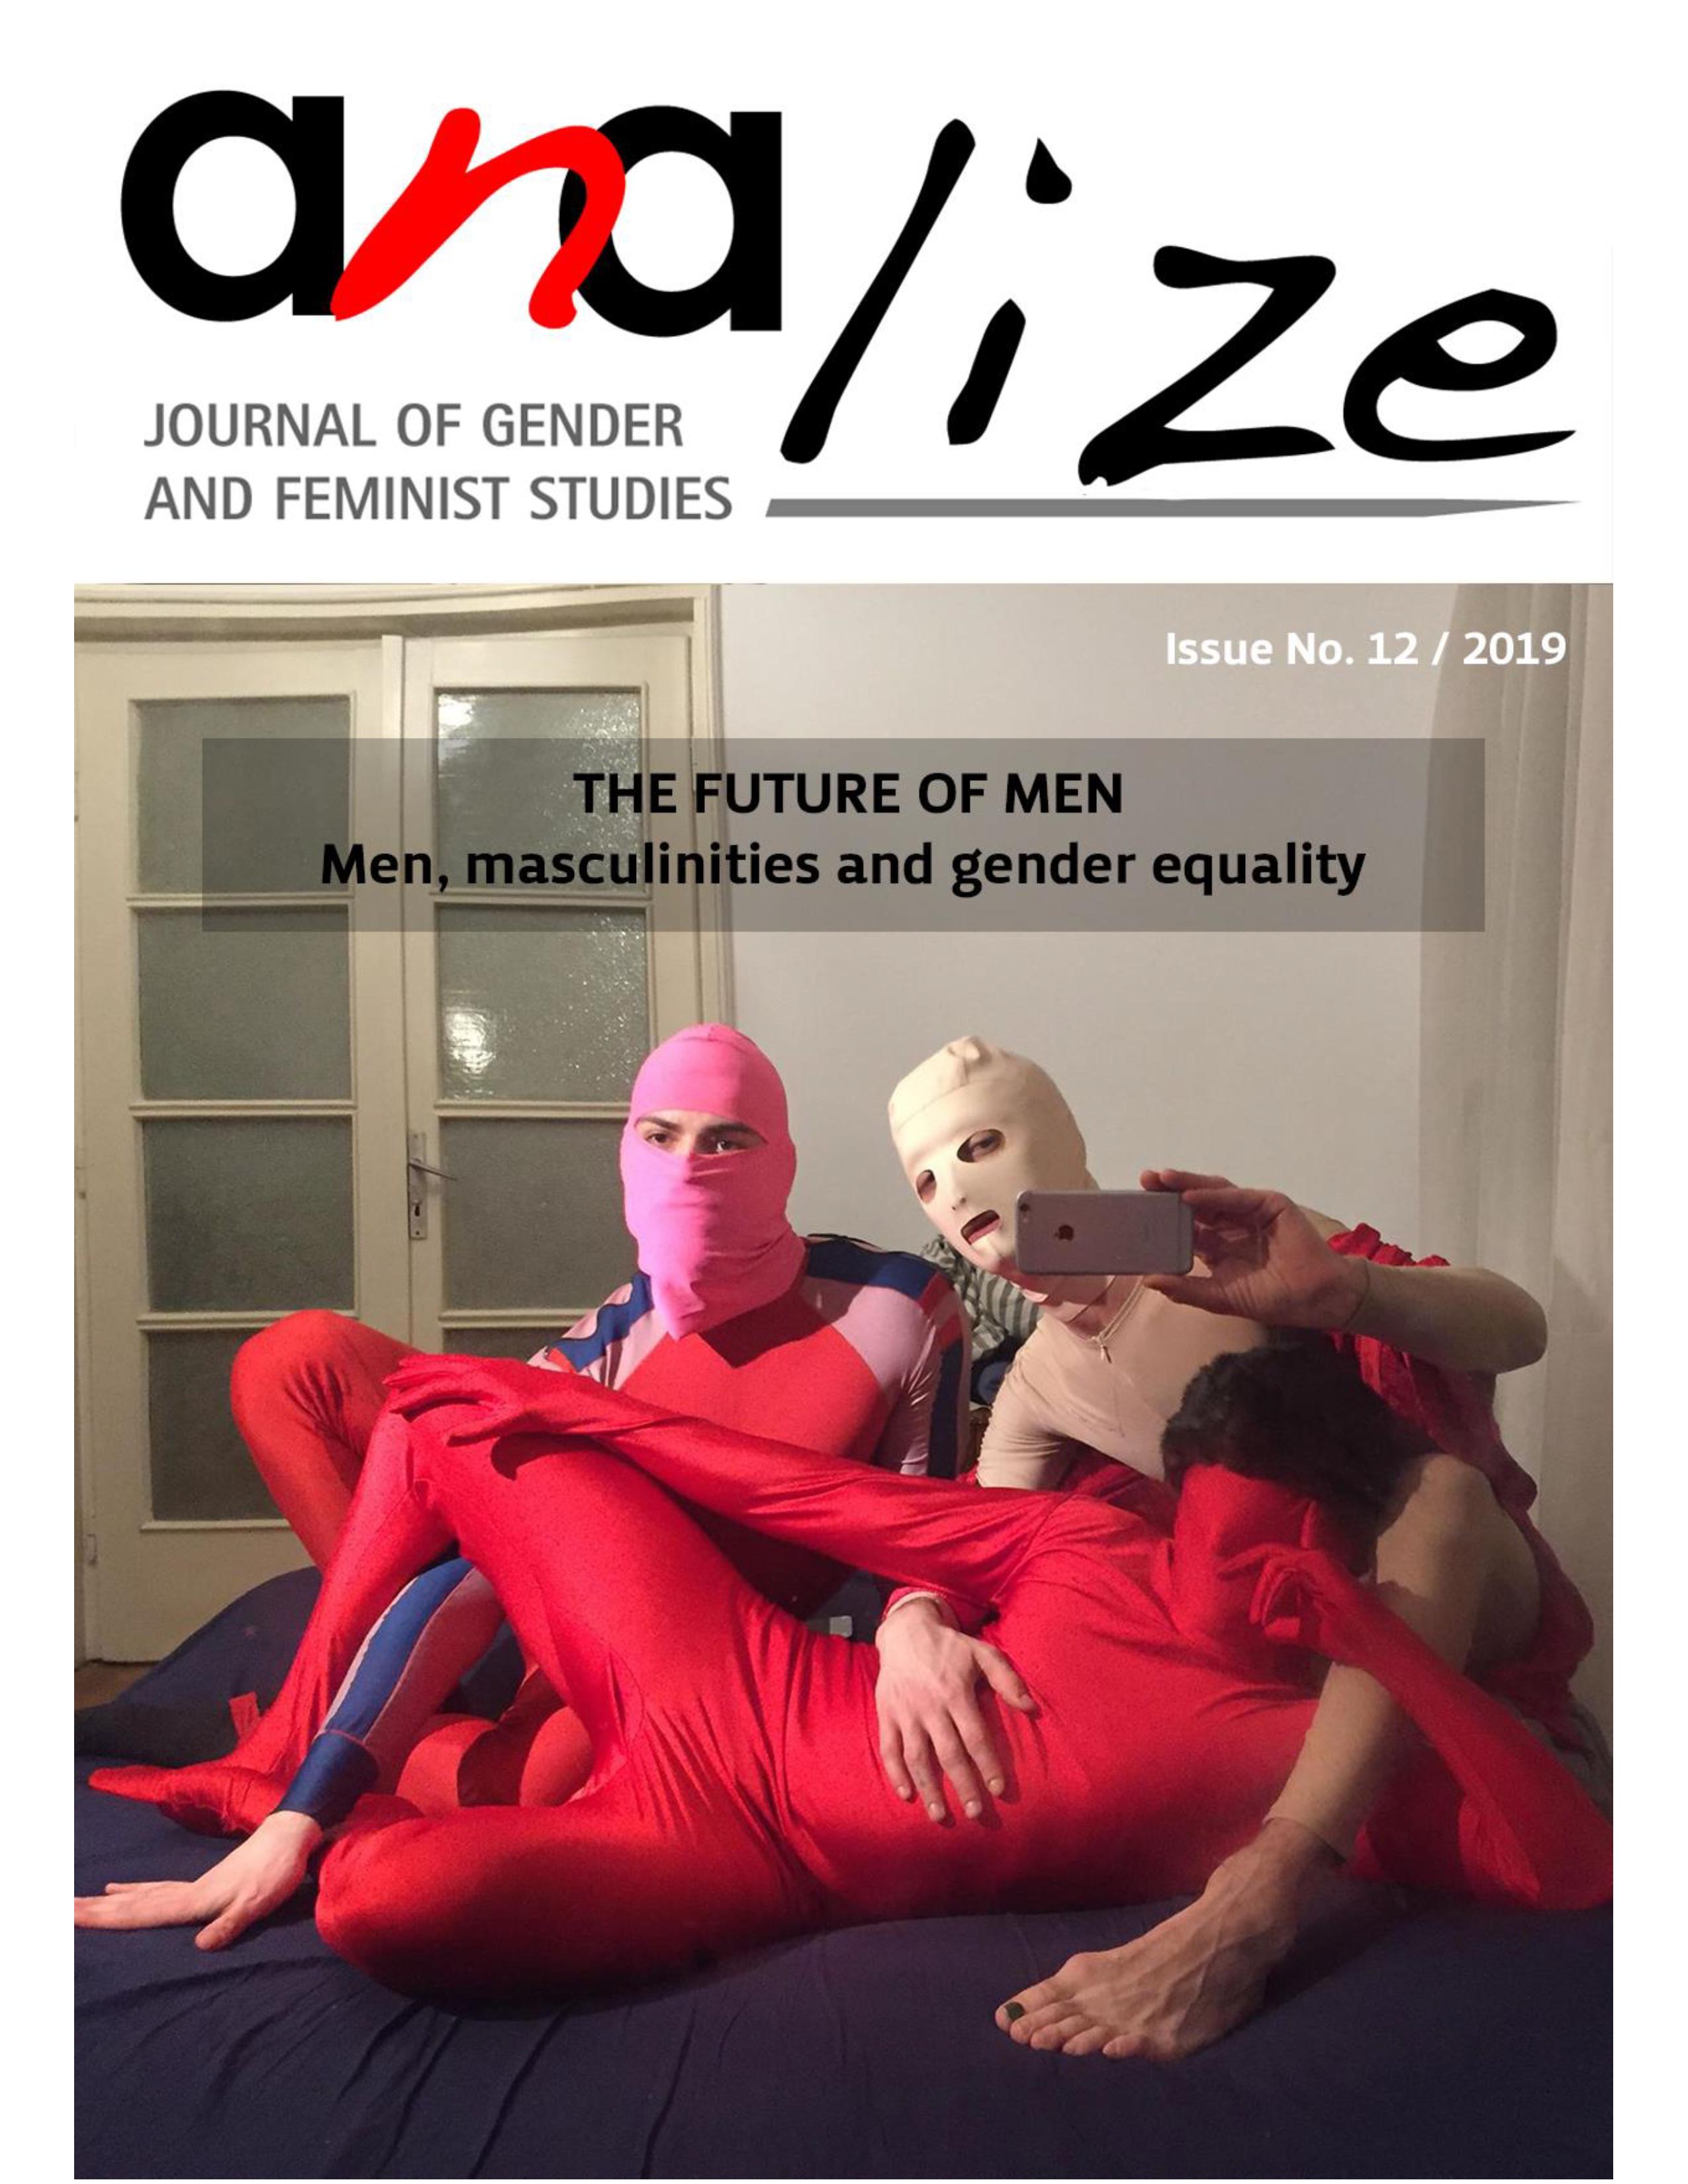 Men’s Attitudes to Gender Stereotypes in Ukraine Cover Image